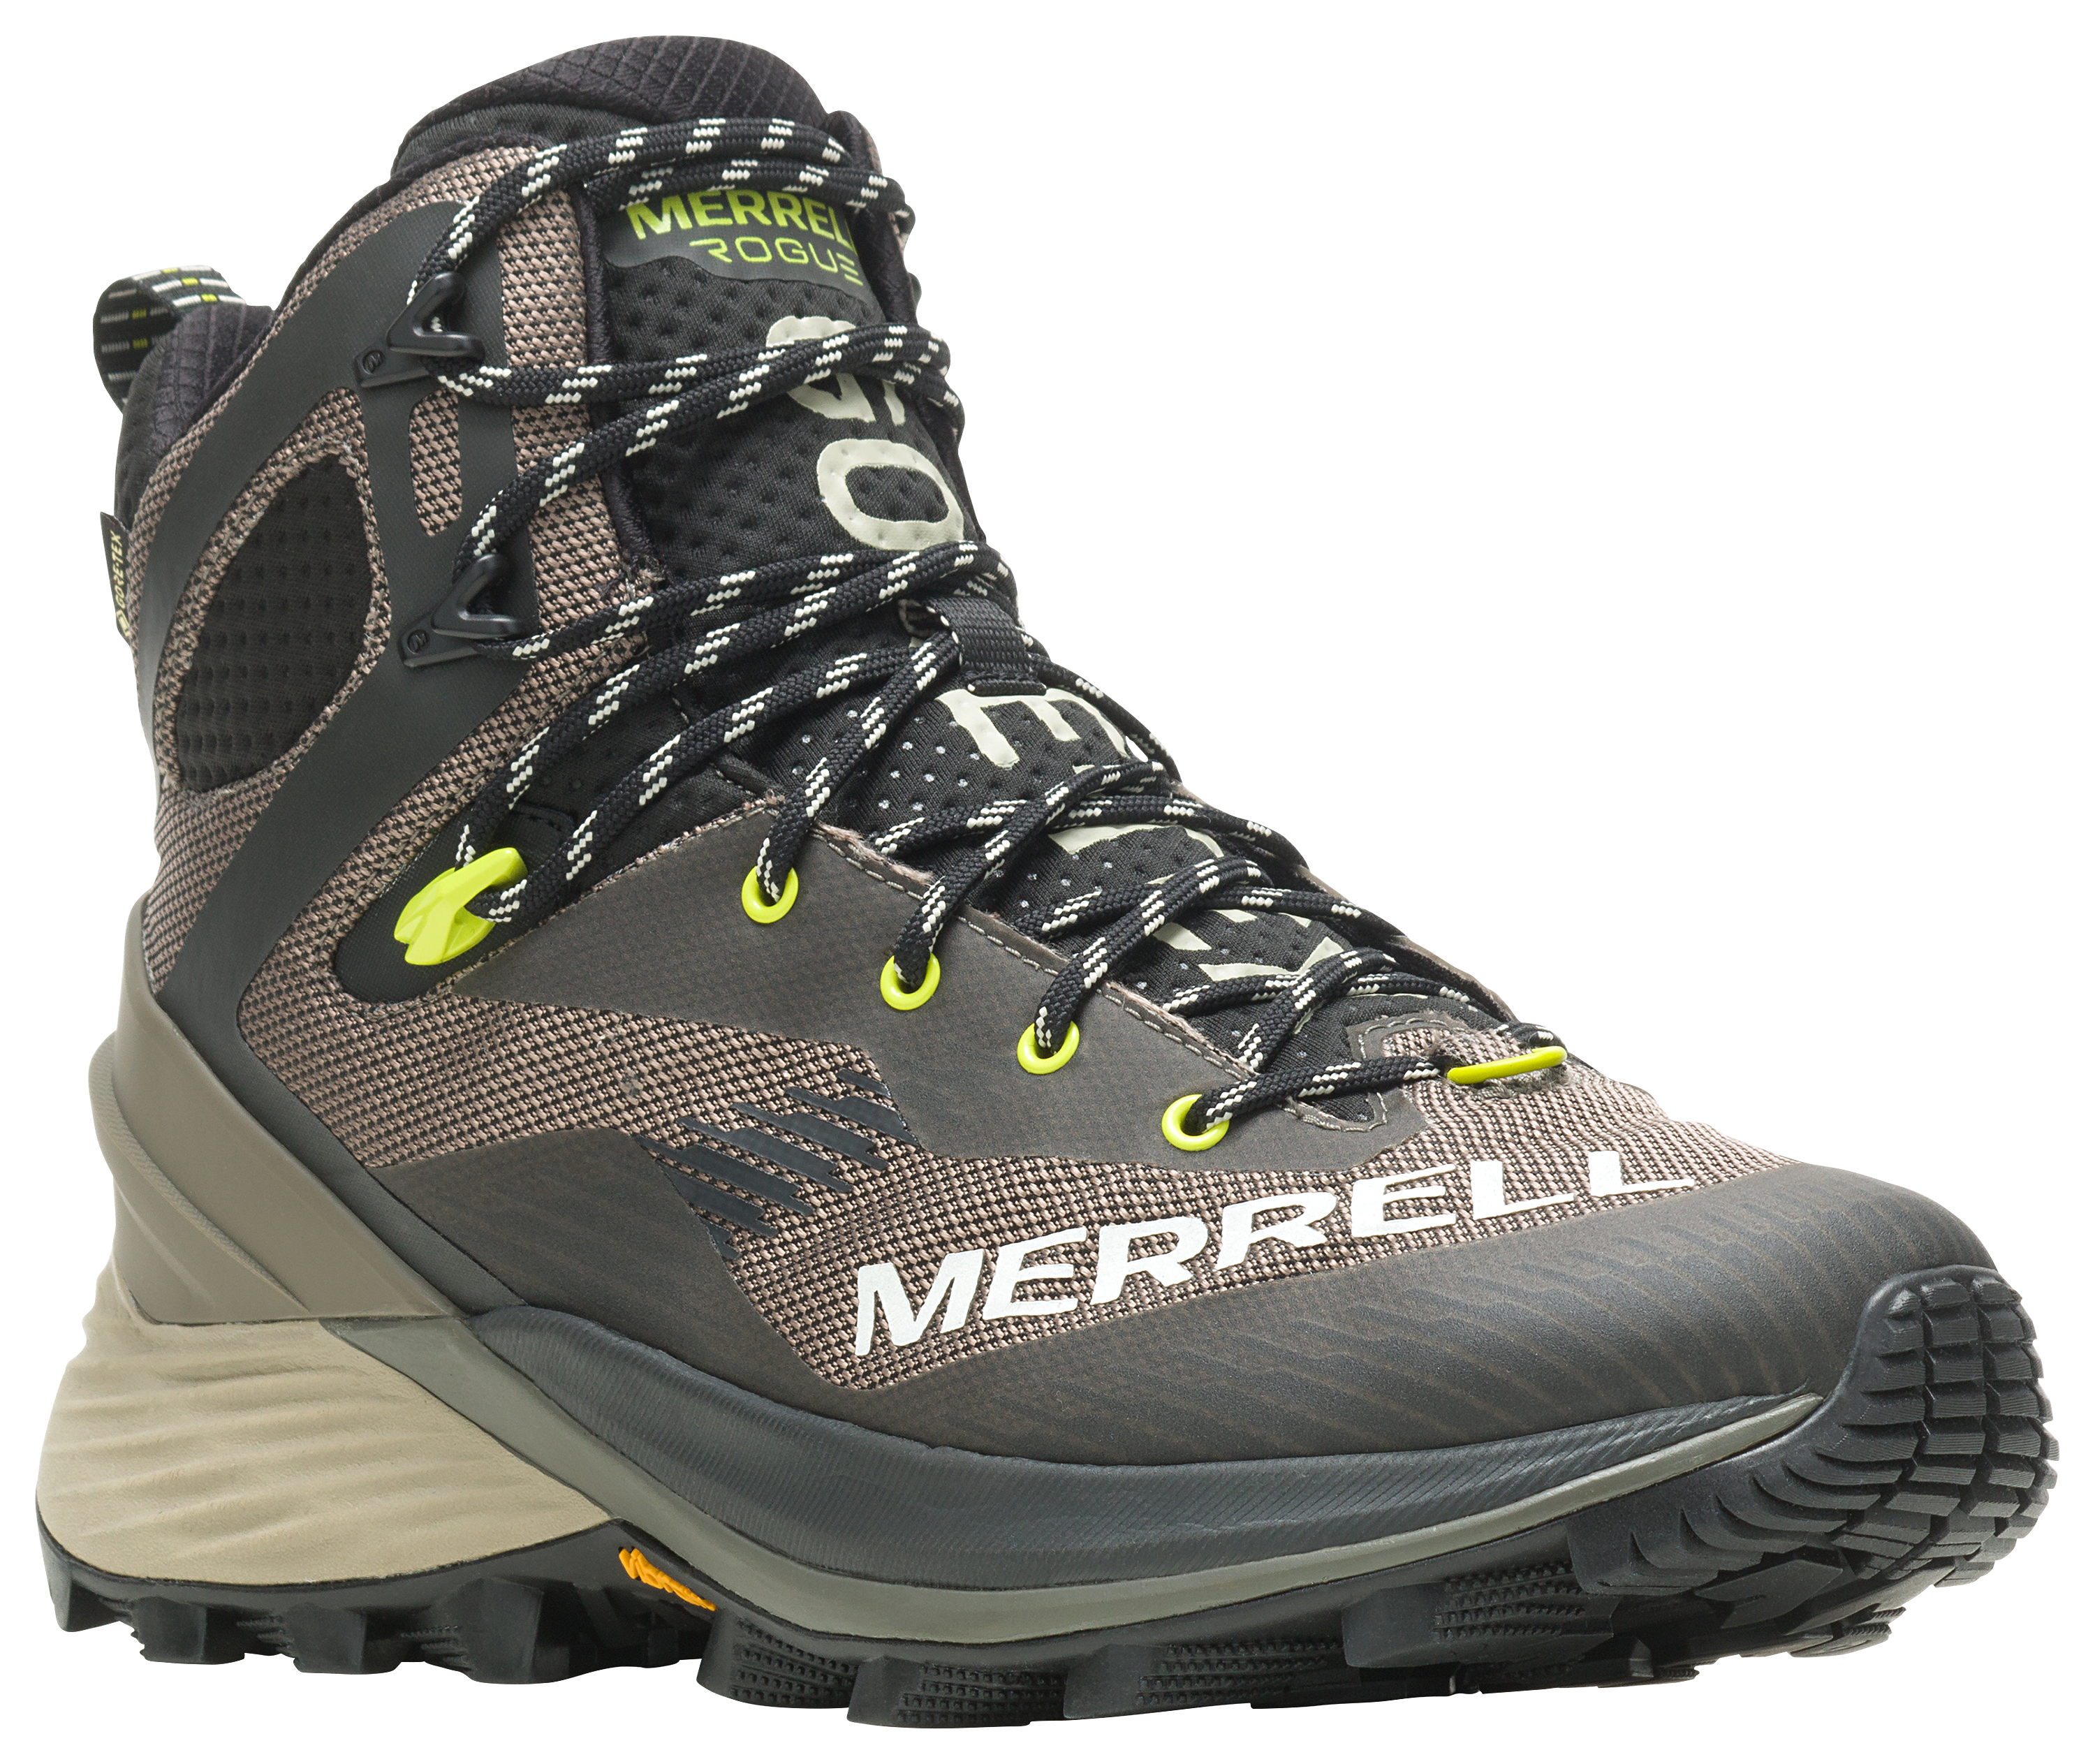 Merrell Rogue Mid GTX Waterproof Hiking Boots for Men - Boulder - 8.5M